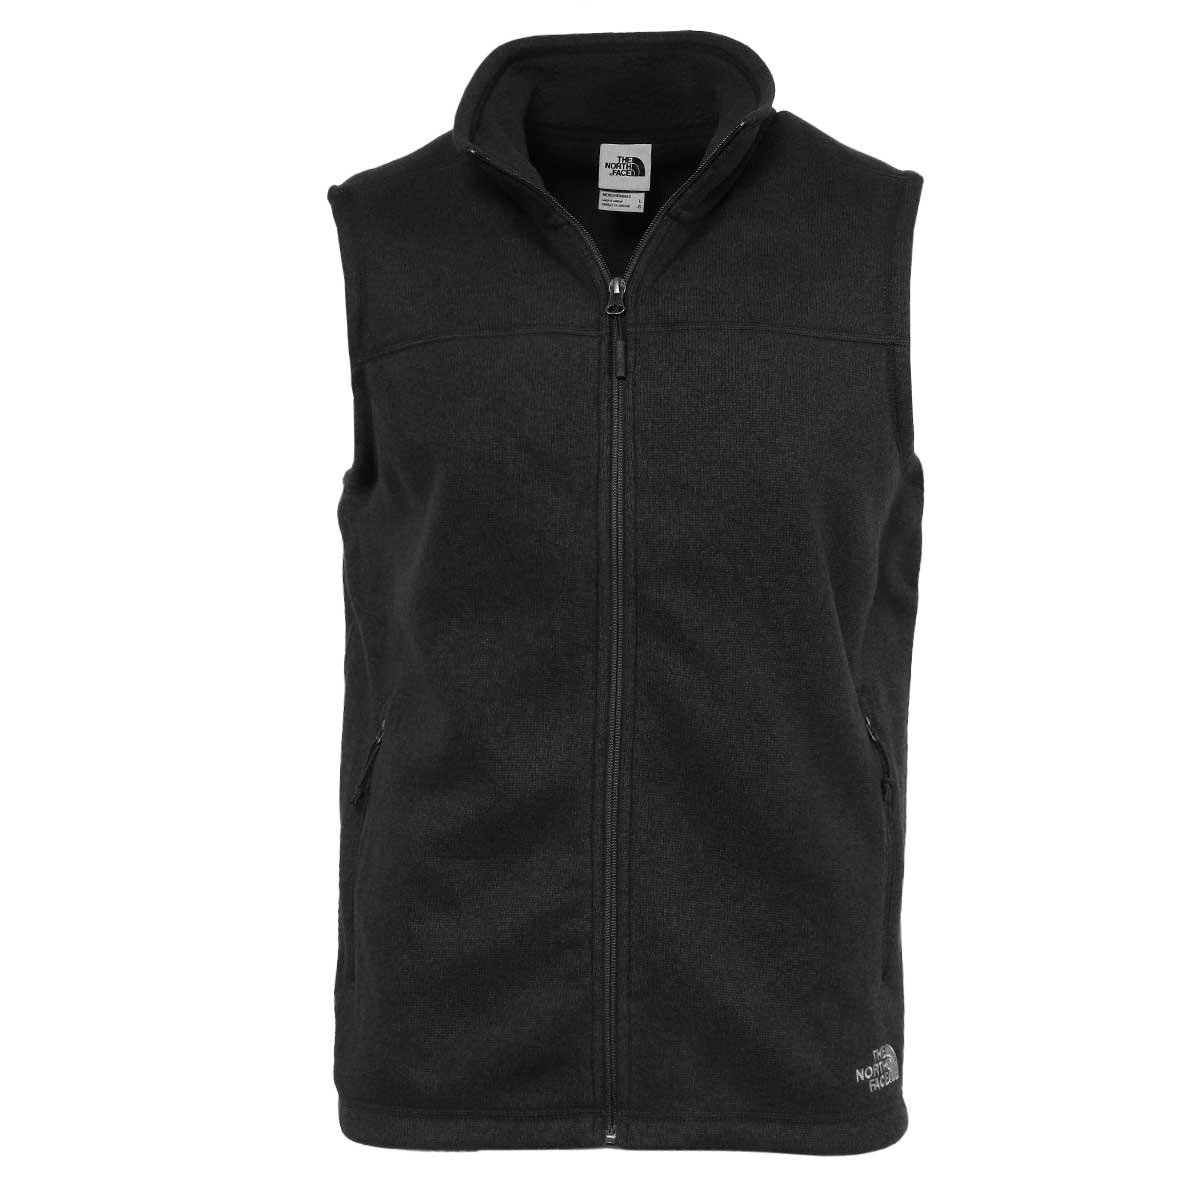 Image of The North Face Men's Sweater Super Soft Vest